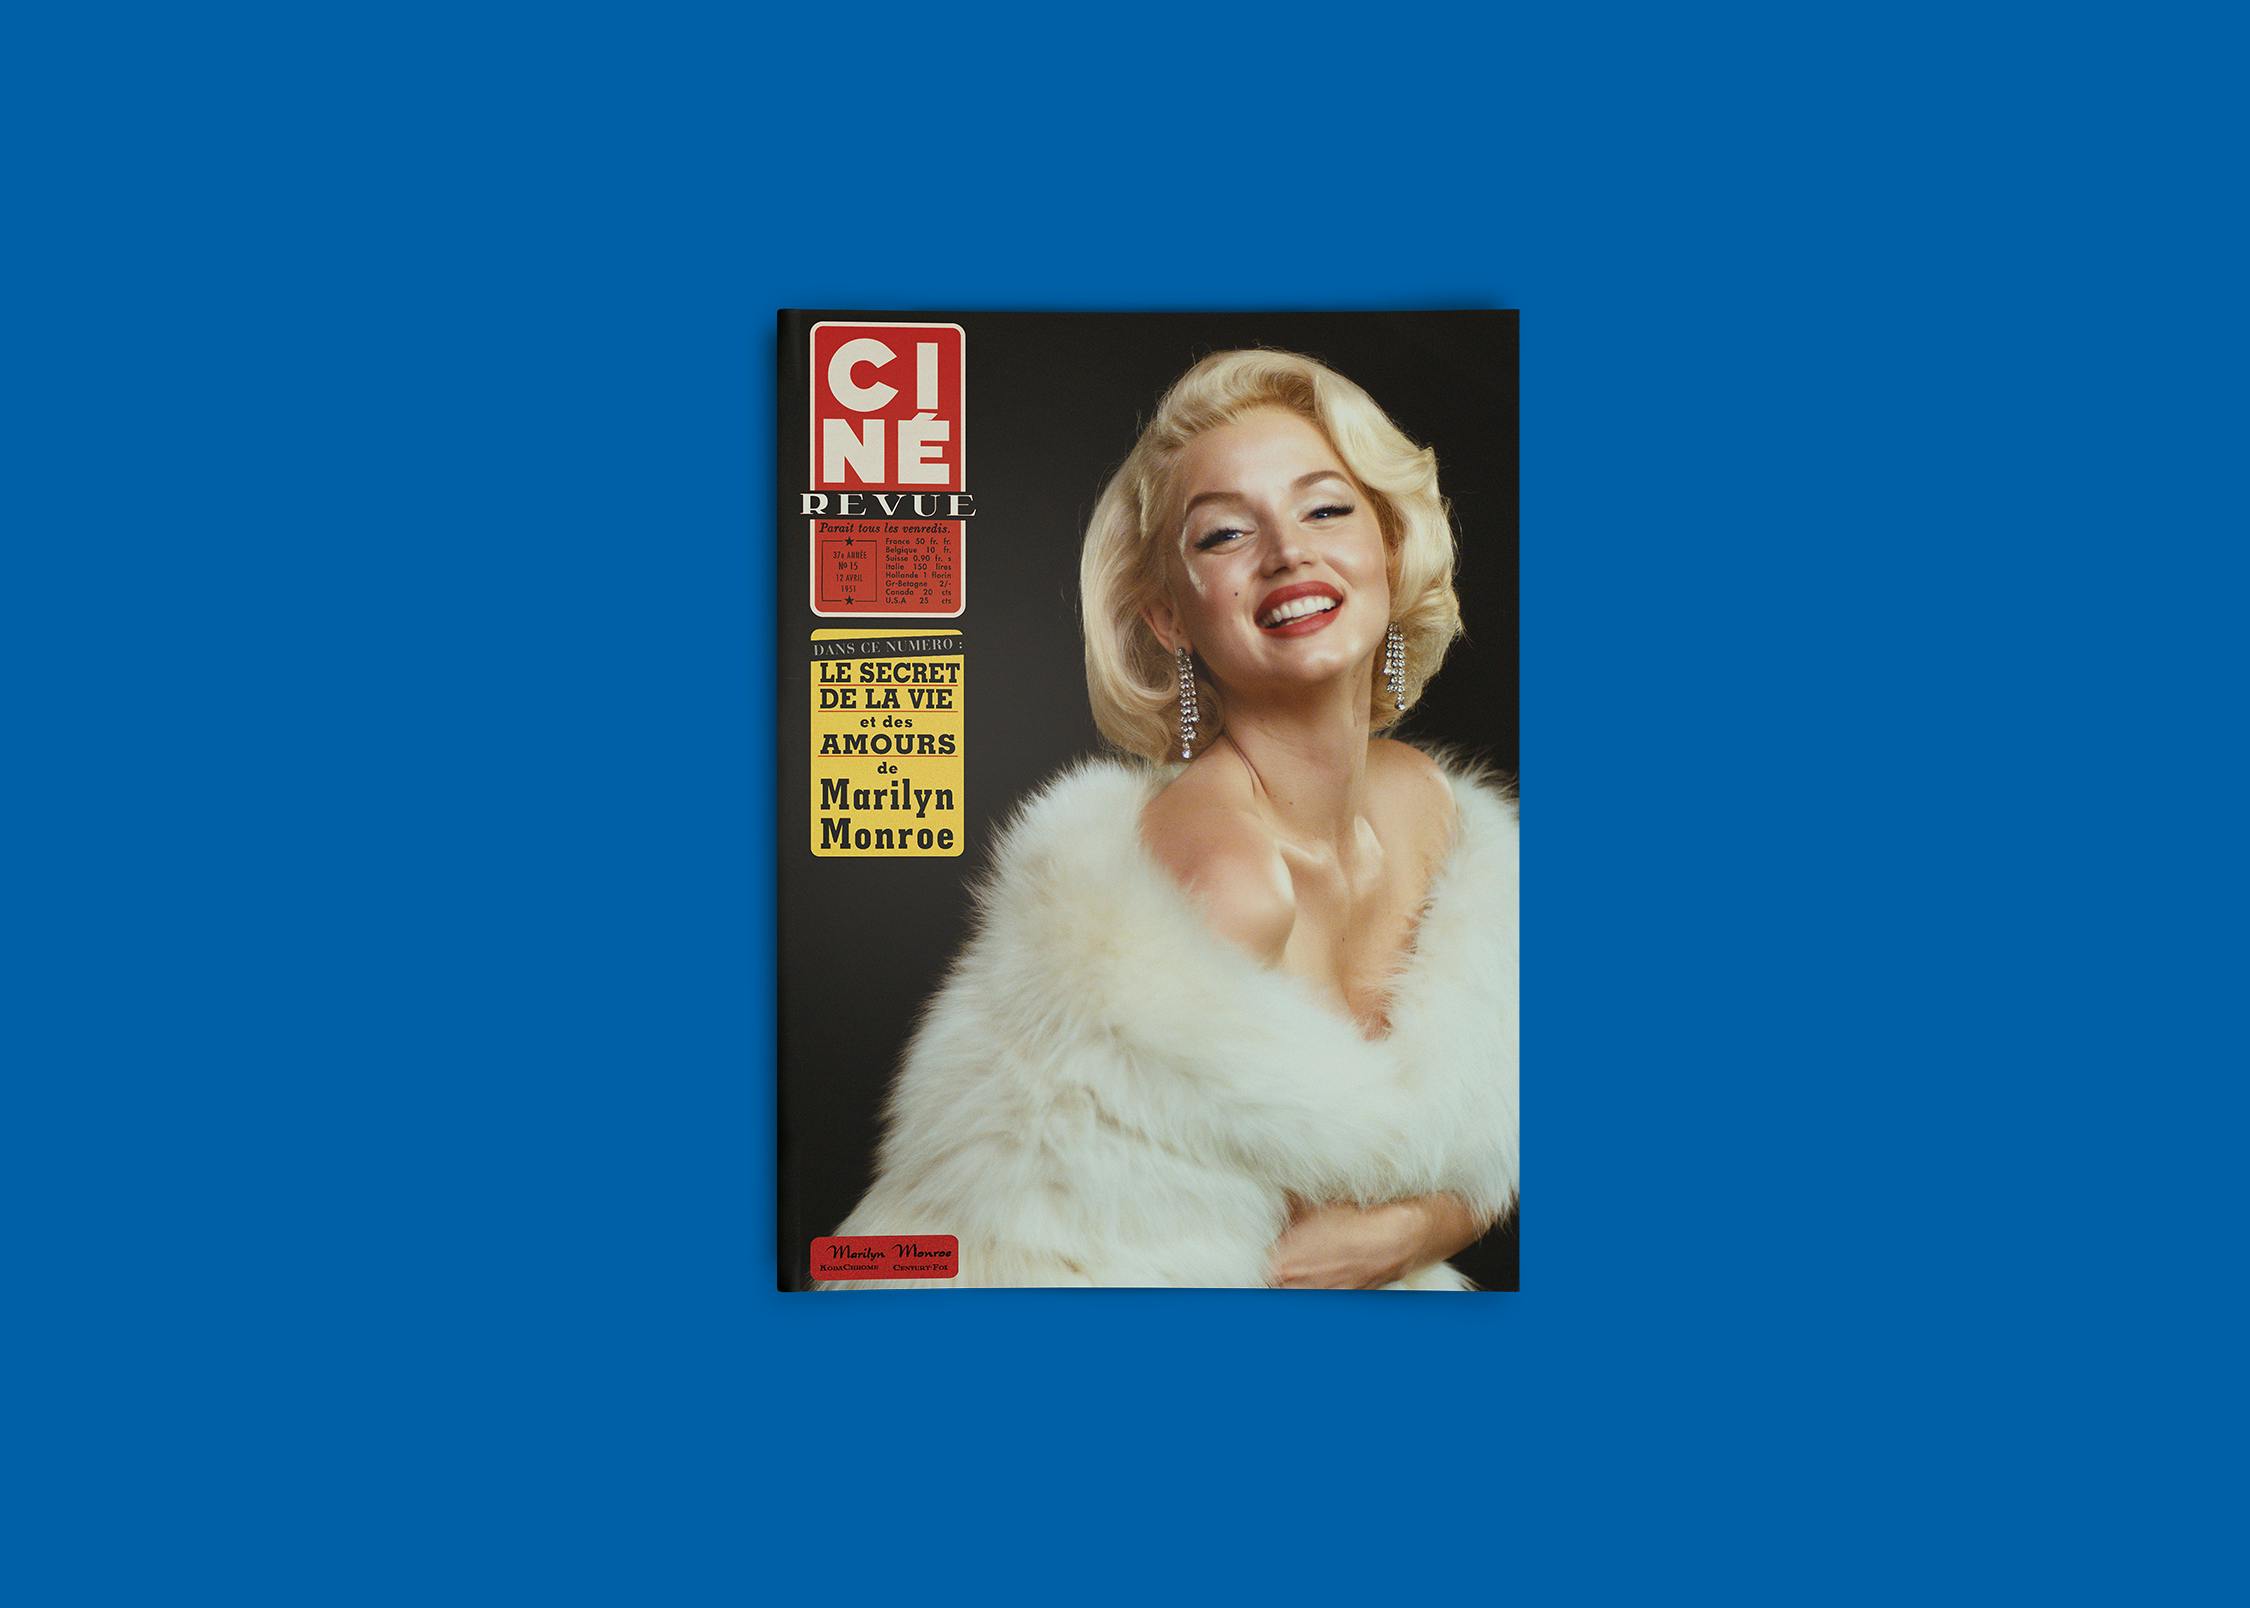 Marilyn Monroe (Ana de Armas) stuns on the cover of a magazine.